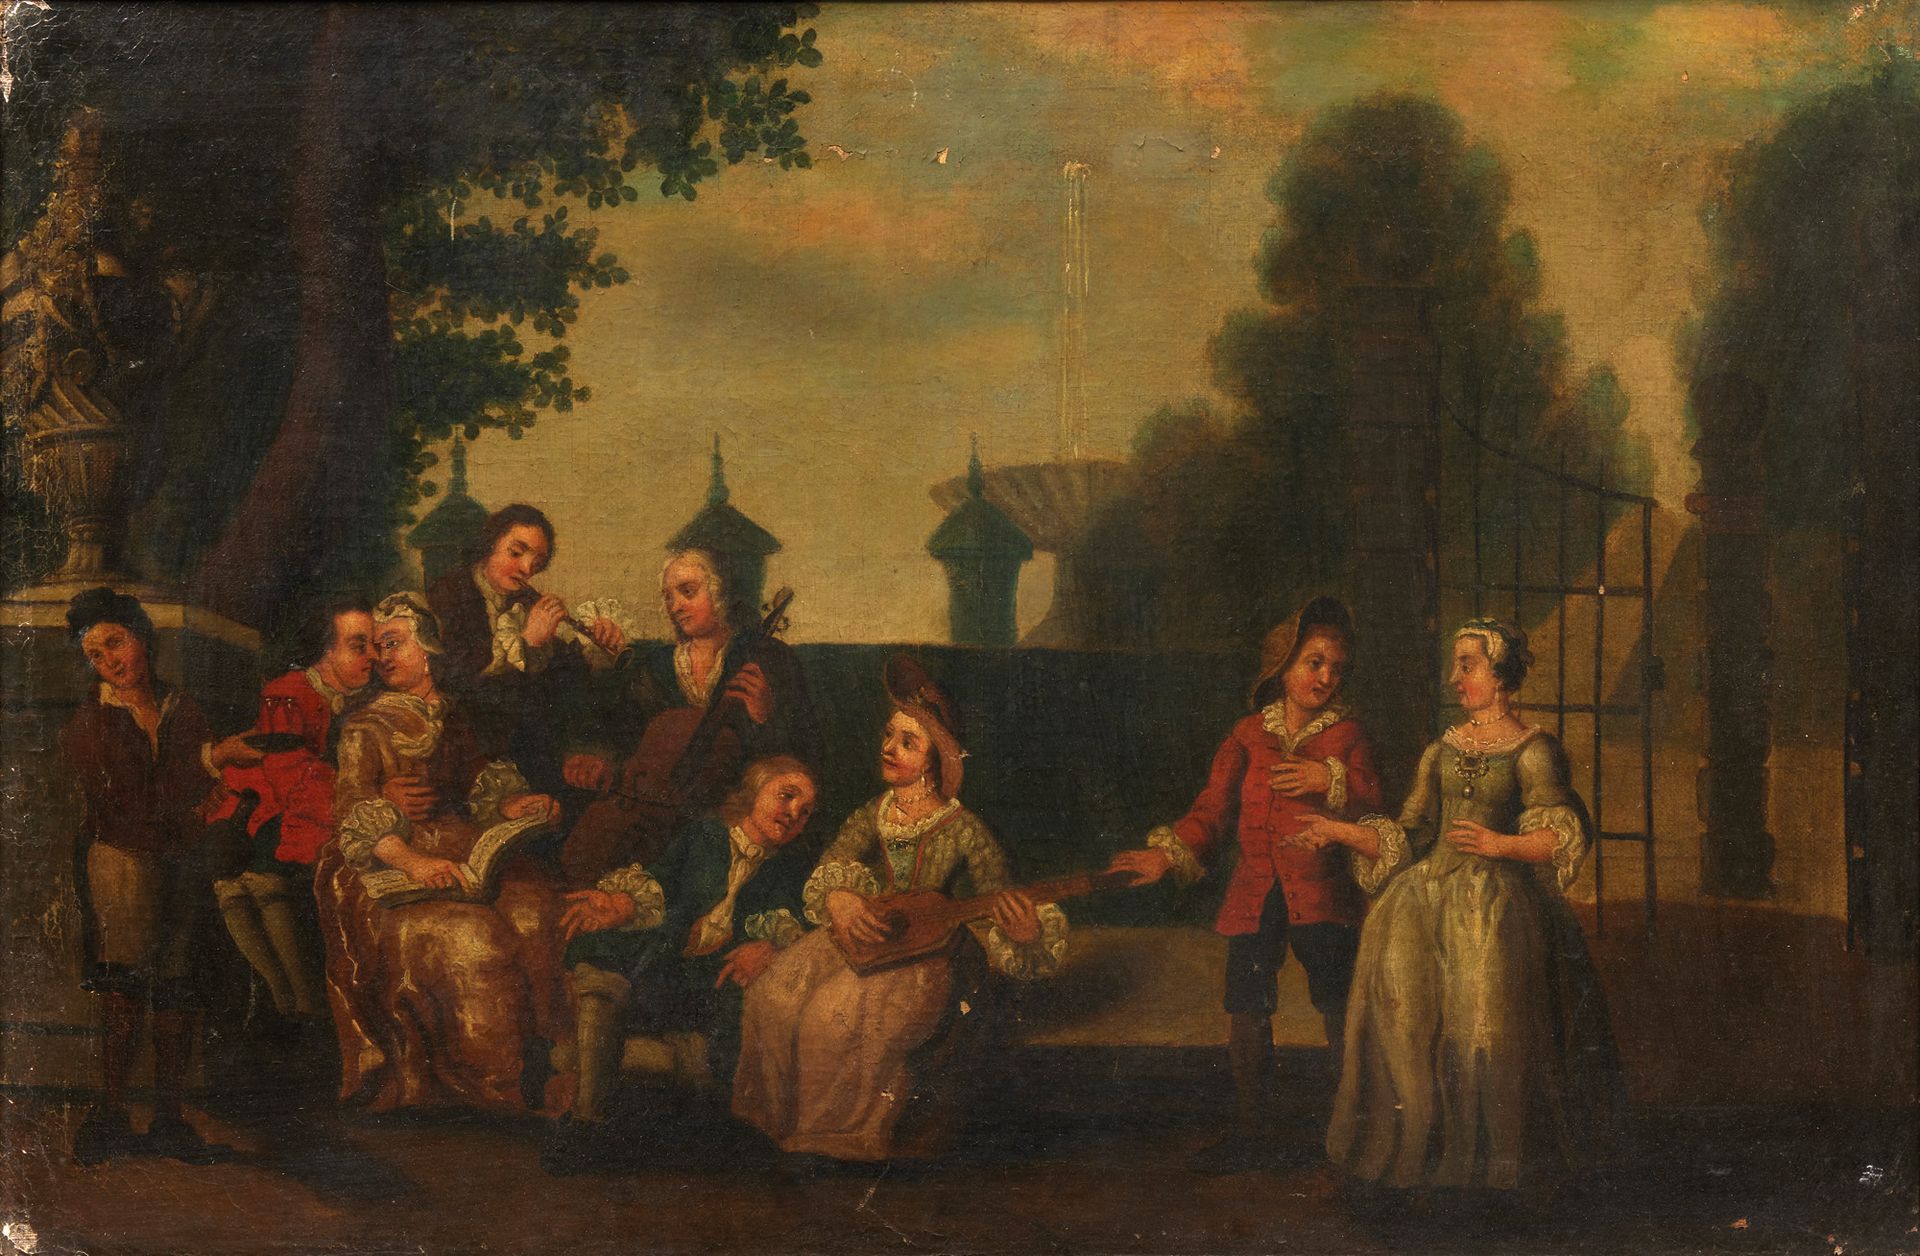 Ecole du XVIIIème siècle Schule des 18. Jahrhunderts

Das Konzert

Zwei Ölgemäld&hellip;